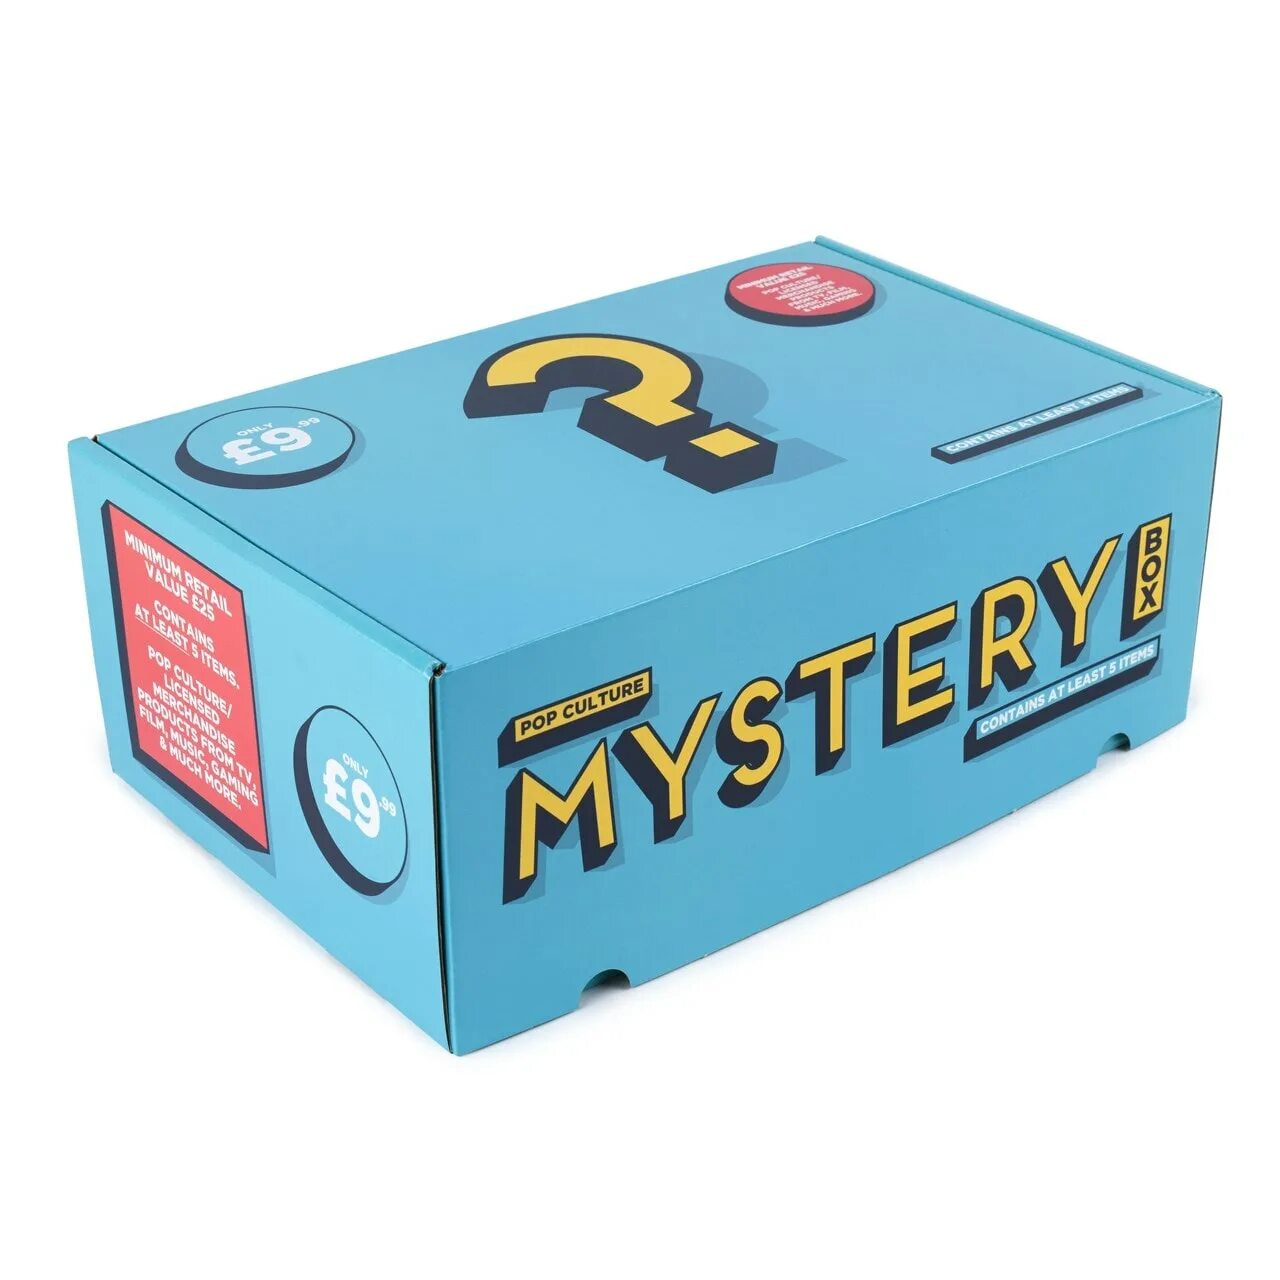 Mystery Box игрушки. Mystery Box фото. Игровая приставка Mystery Box. Mystery Box Pop Culture.